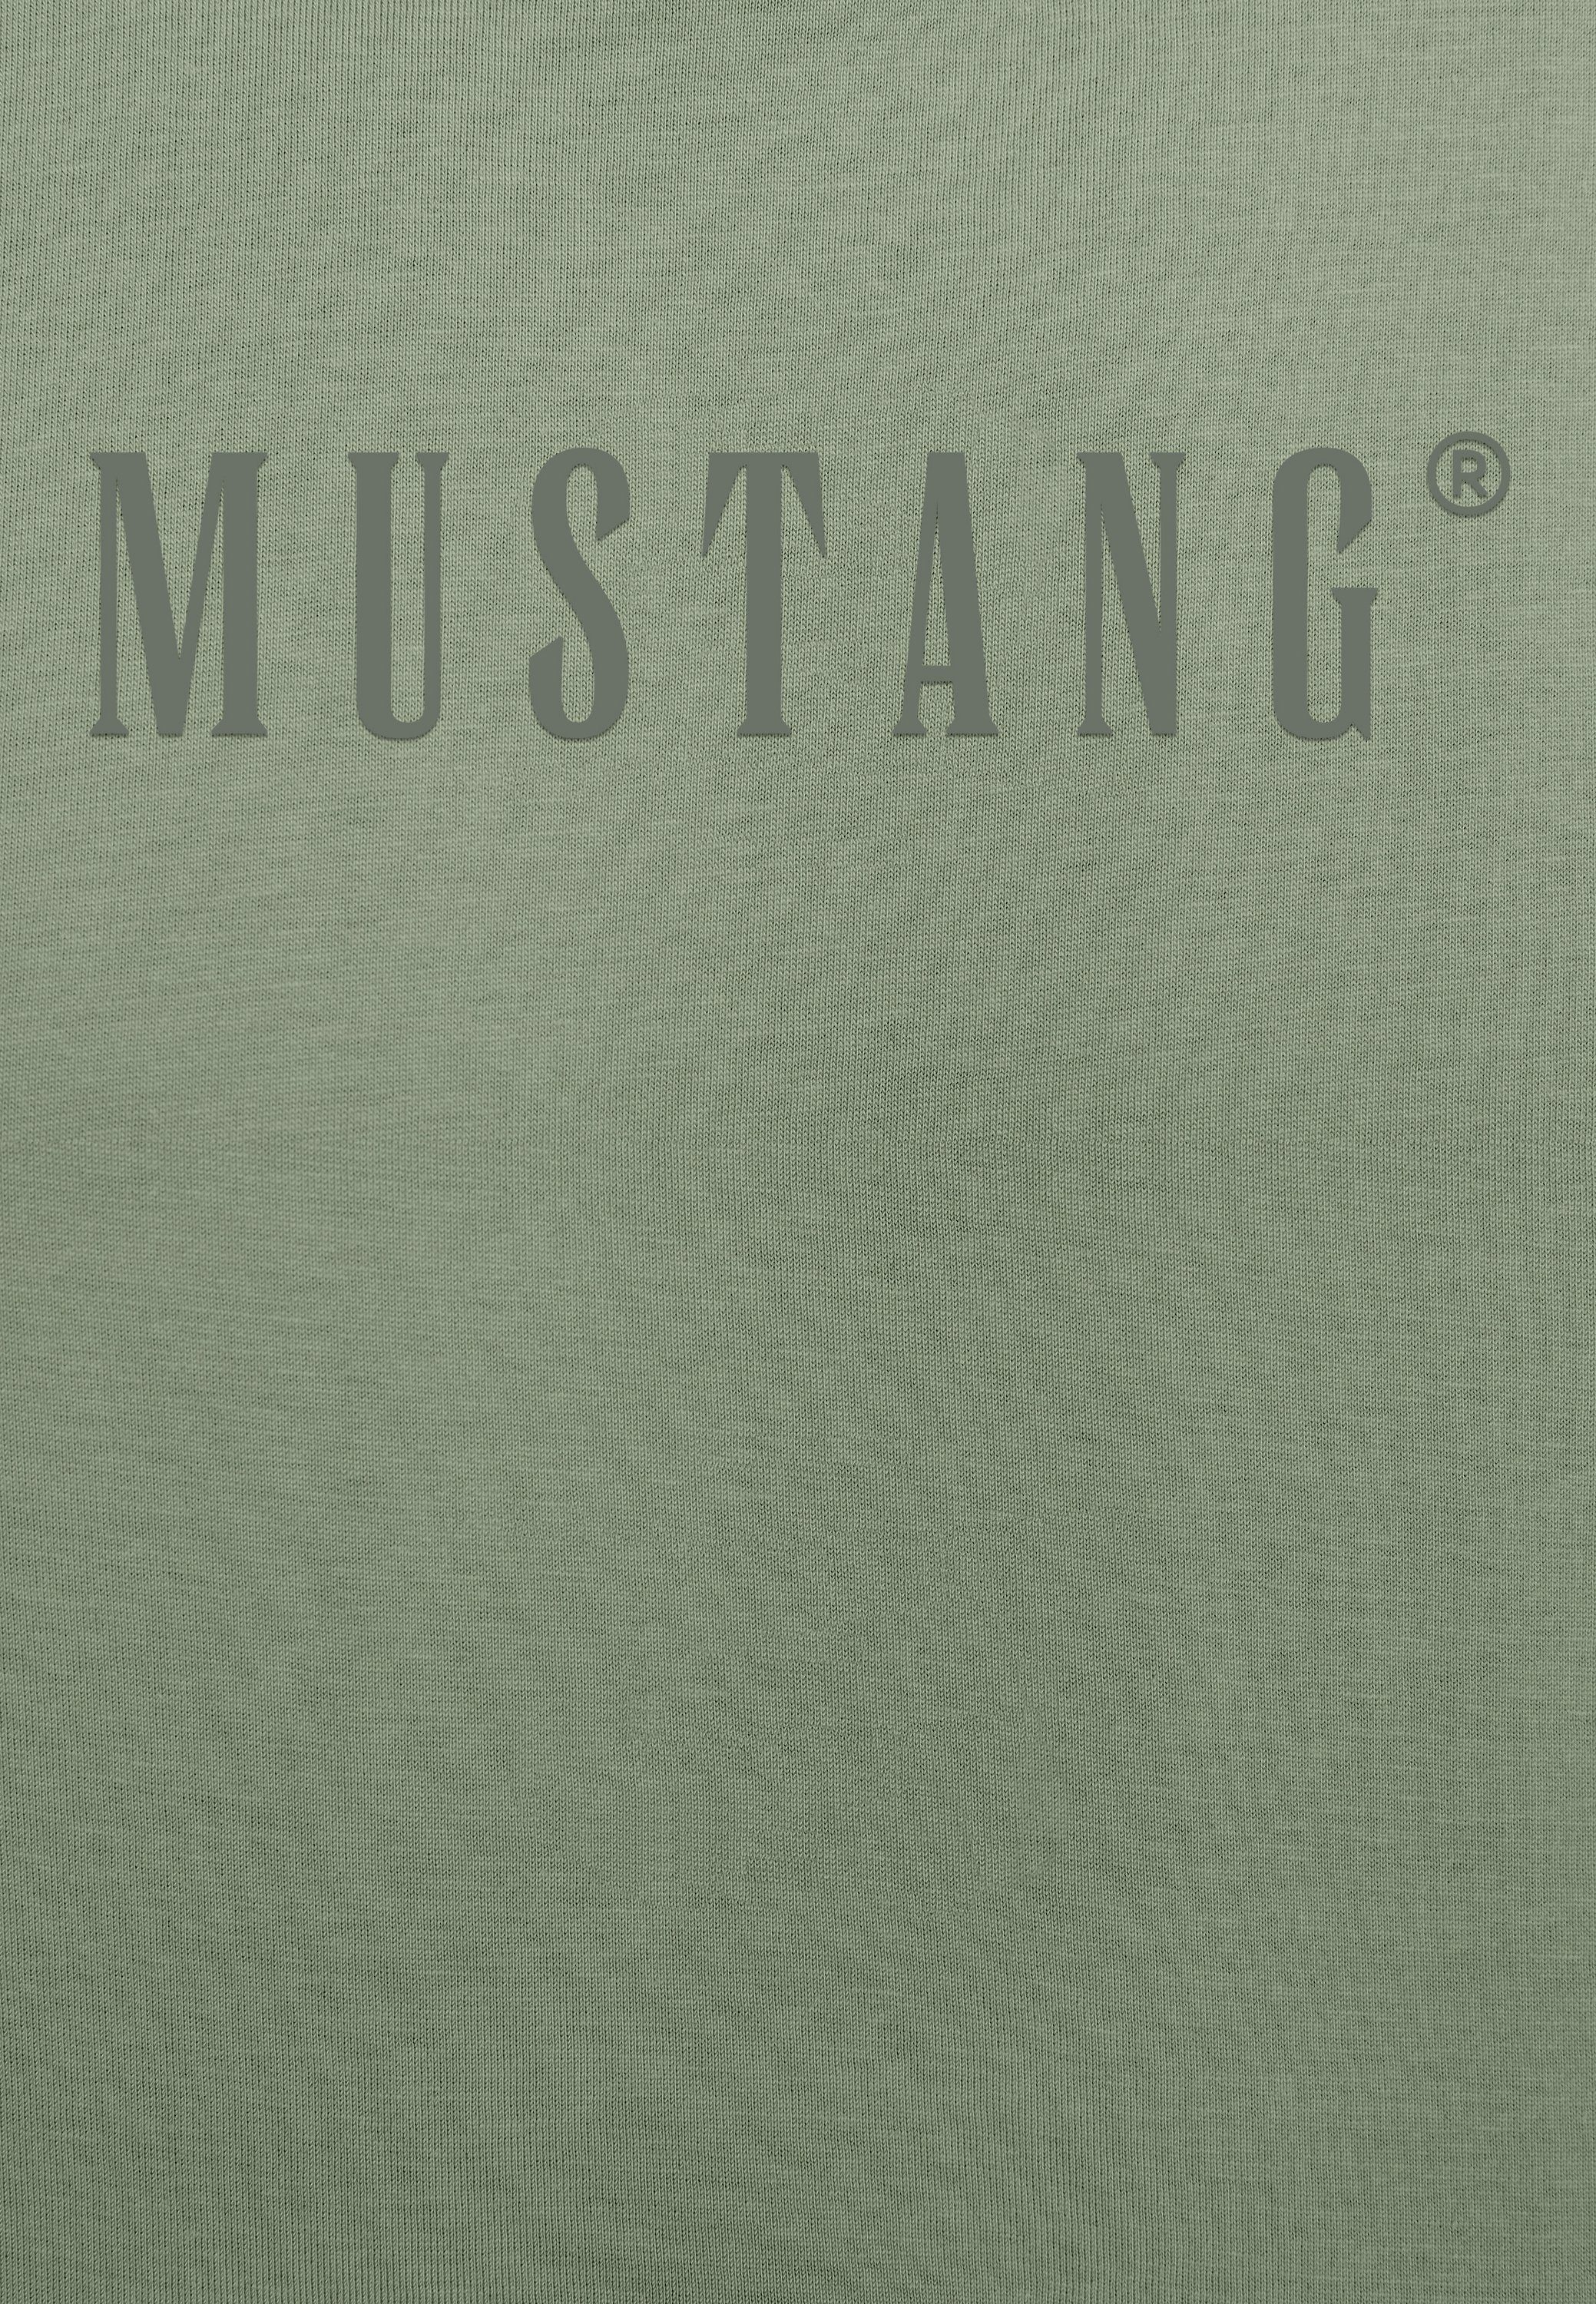 Sweatshirt grün MUSTANG Style Mustang C Logo Bea Print